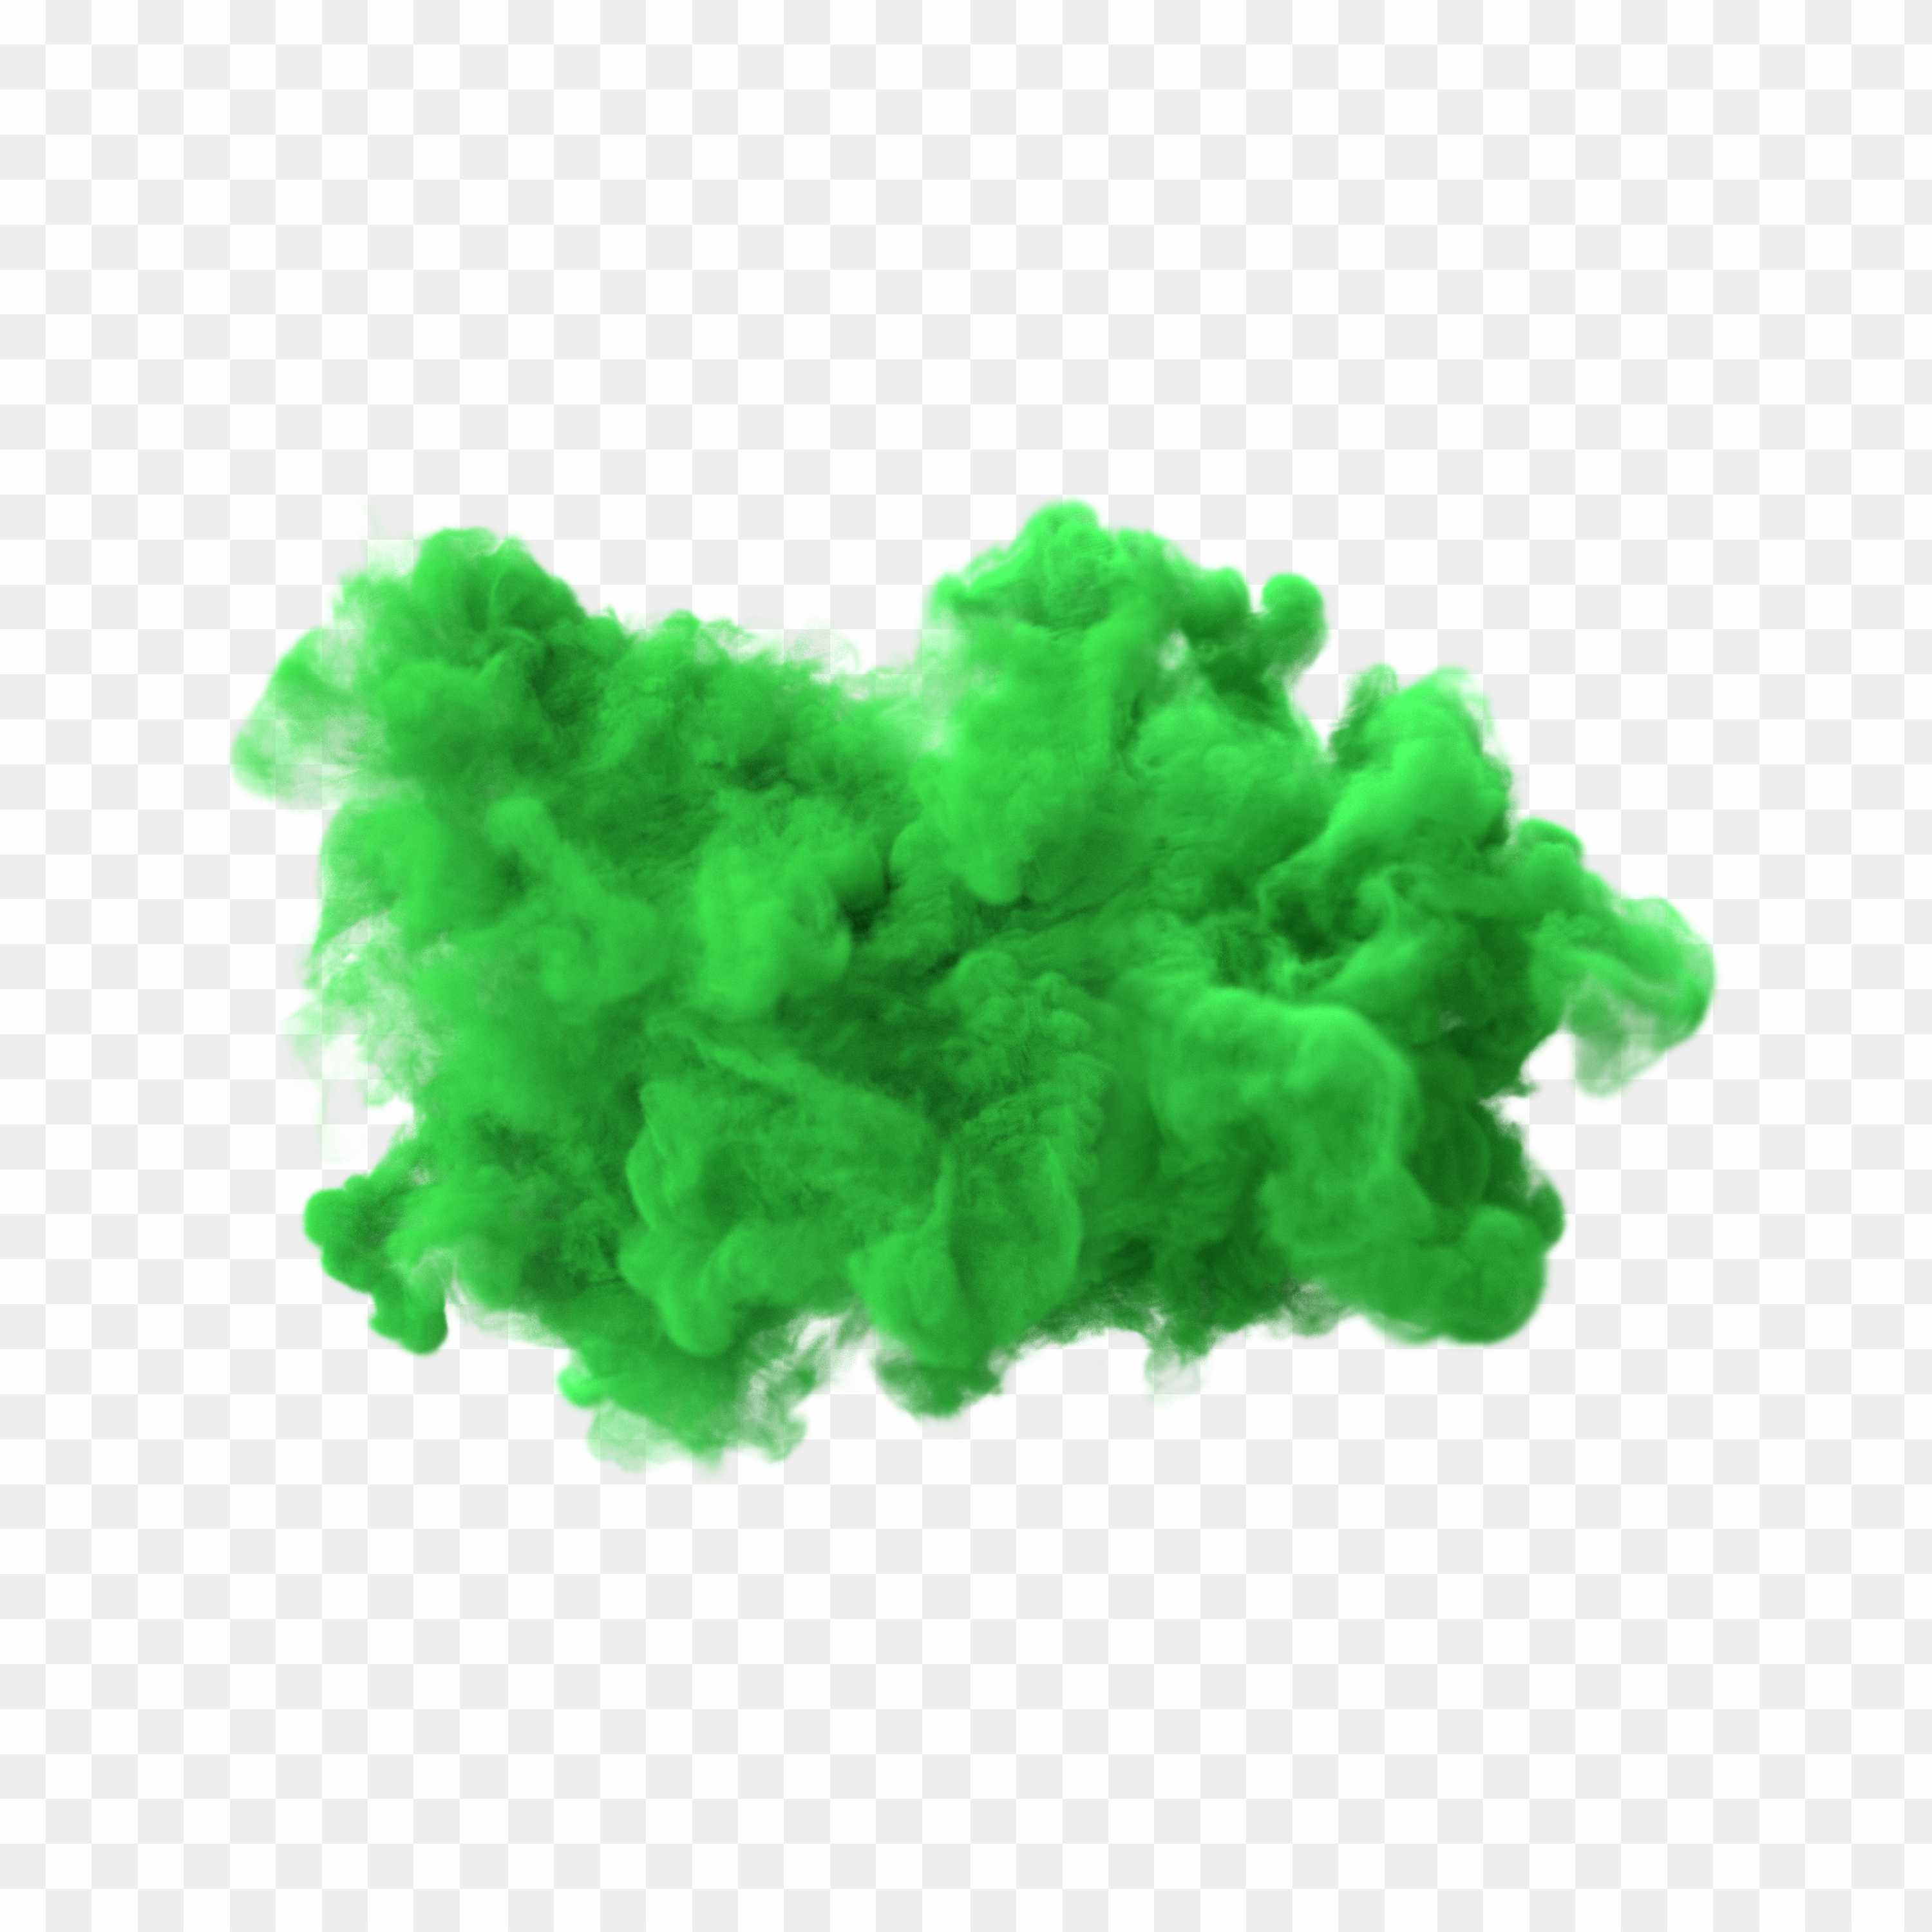 Colour smoke PNG transparent image